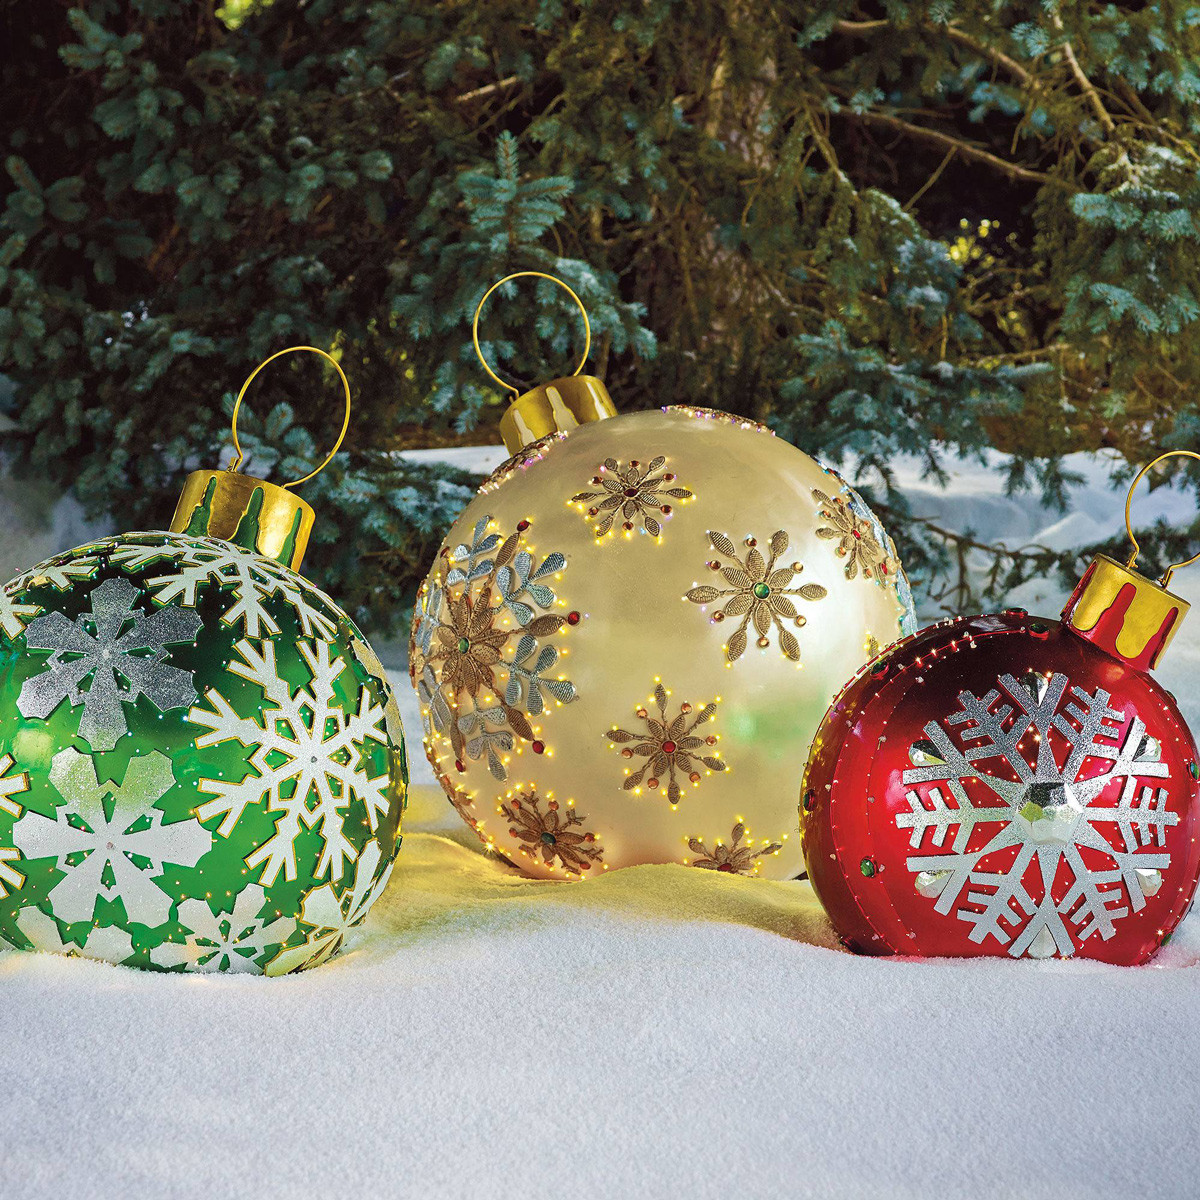 Outdoor Christmas Ball Ornaments
 Massive Fiber Optic LED Outdoor Christmas Ornaments The